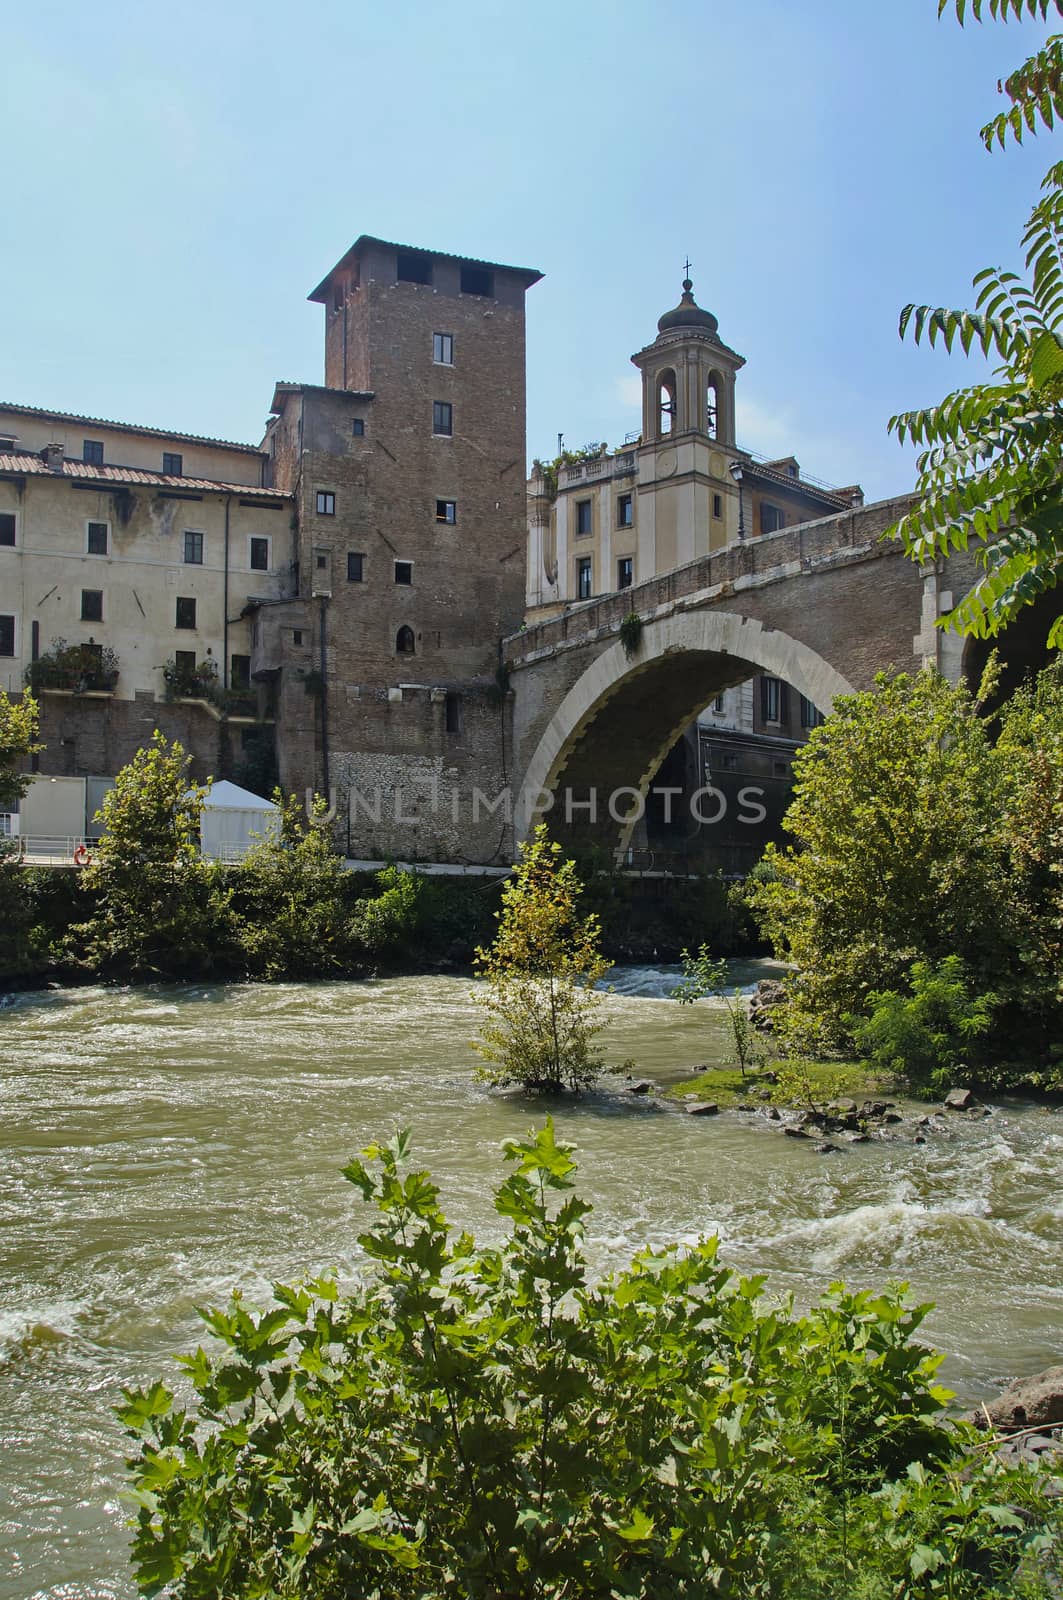 Photo of Castello Caetani Historical landmark, river Tiber and Ponte Fabricio bridge, view from Lungotevere de' Cenci, Rome, Italy